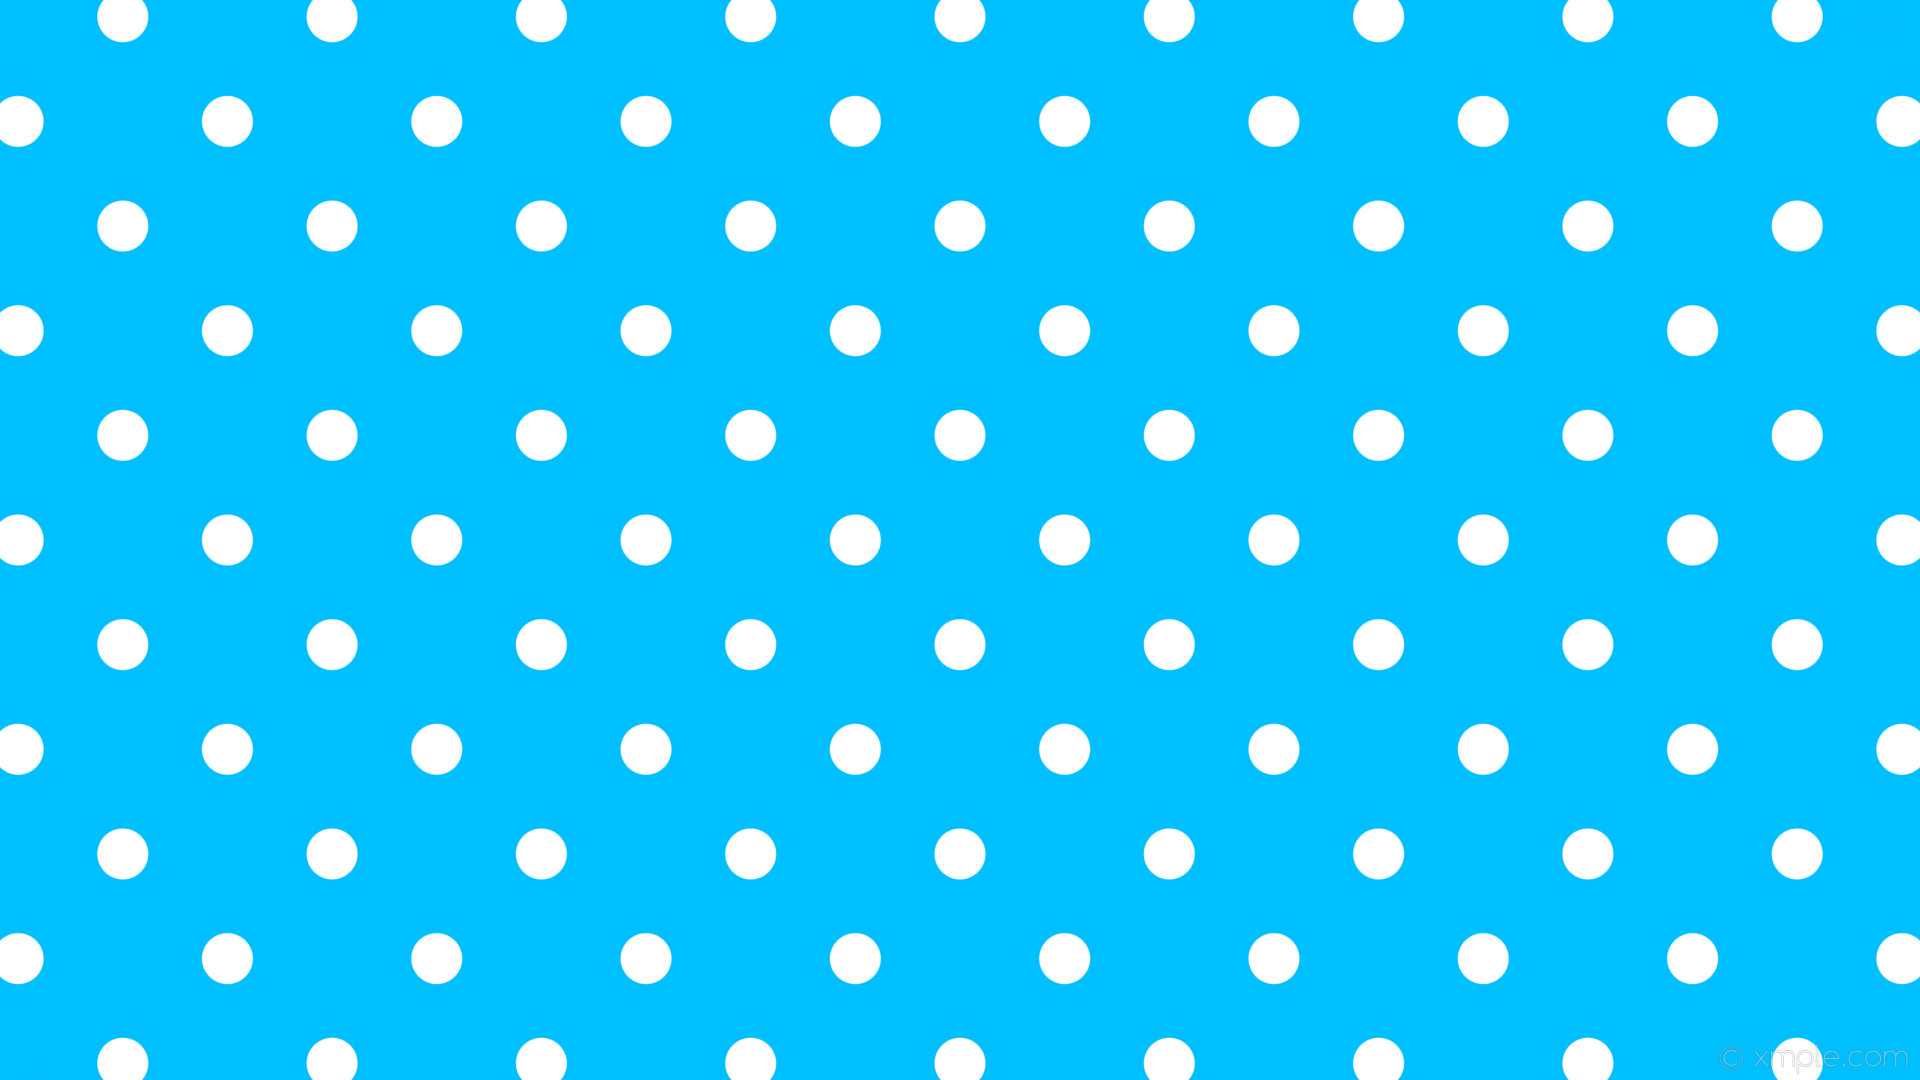 1920x1080 wallpaper spots blue white polka dots deep sky blue #00bfff #ffffff 225Â°  51px